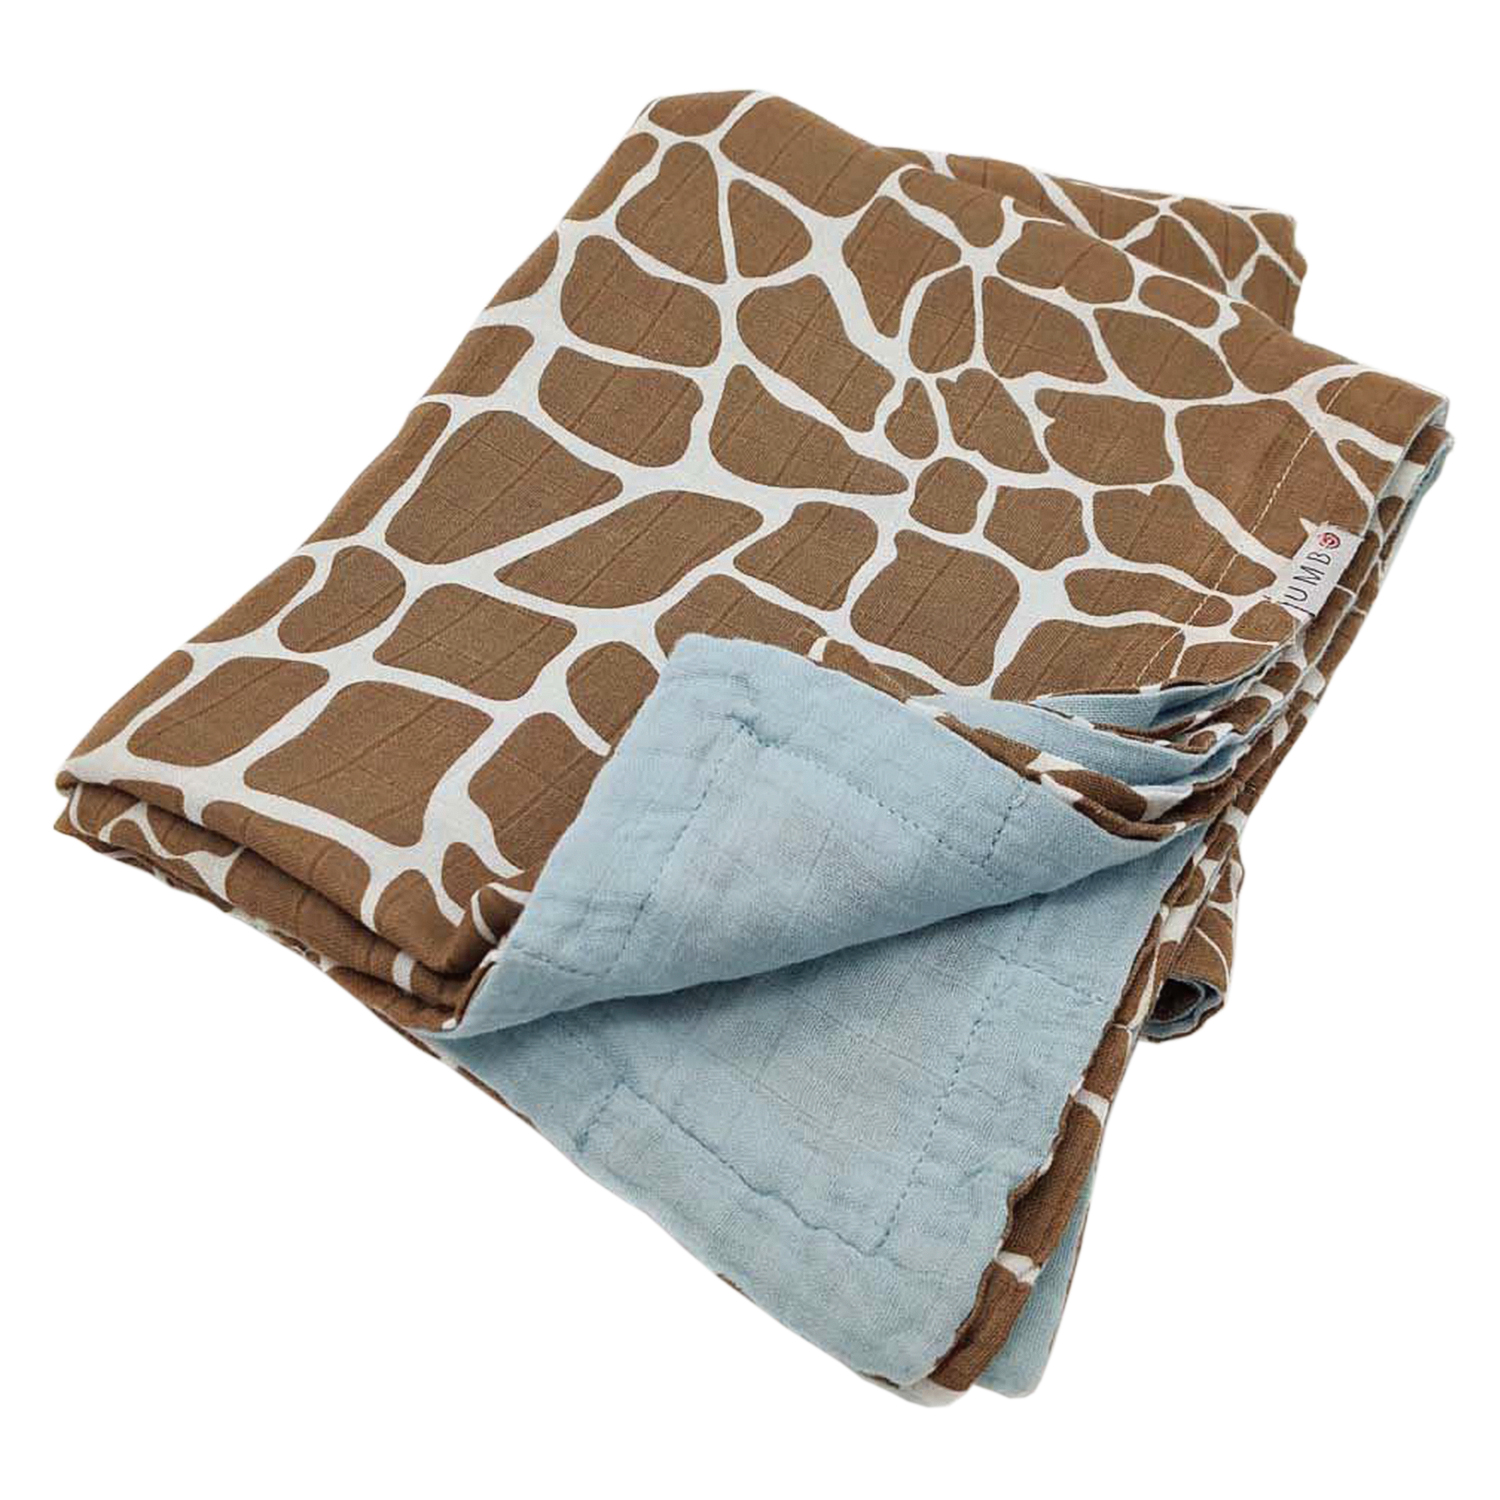 Муслиновое одеяло "Жираф и Плывущее облако", 118х90 см UMBO детское, цвет нет цвета - фото 1